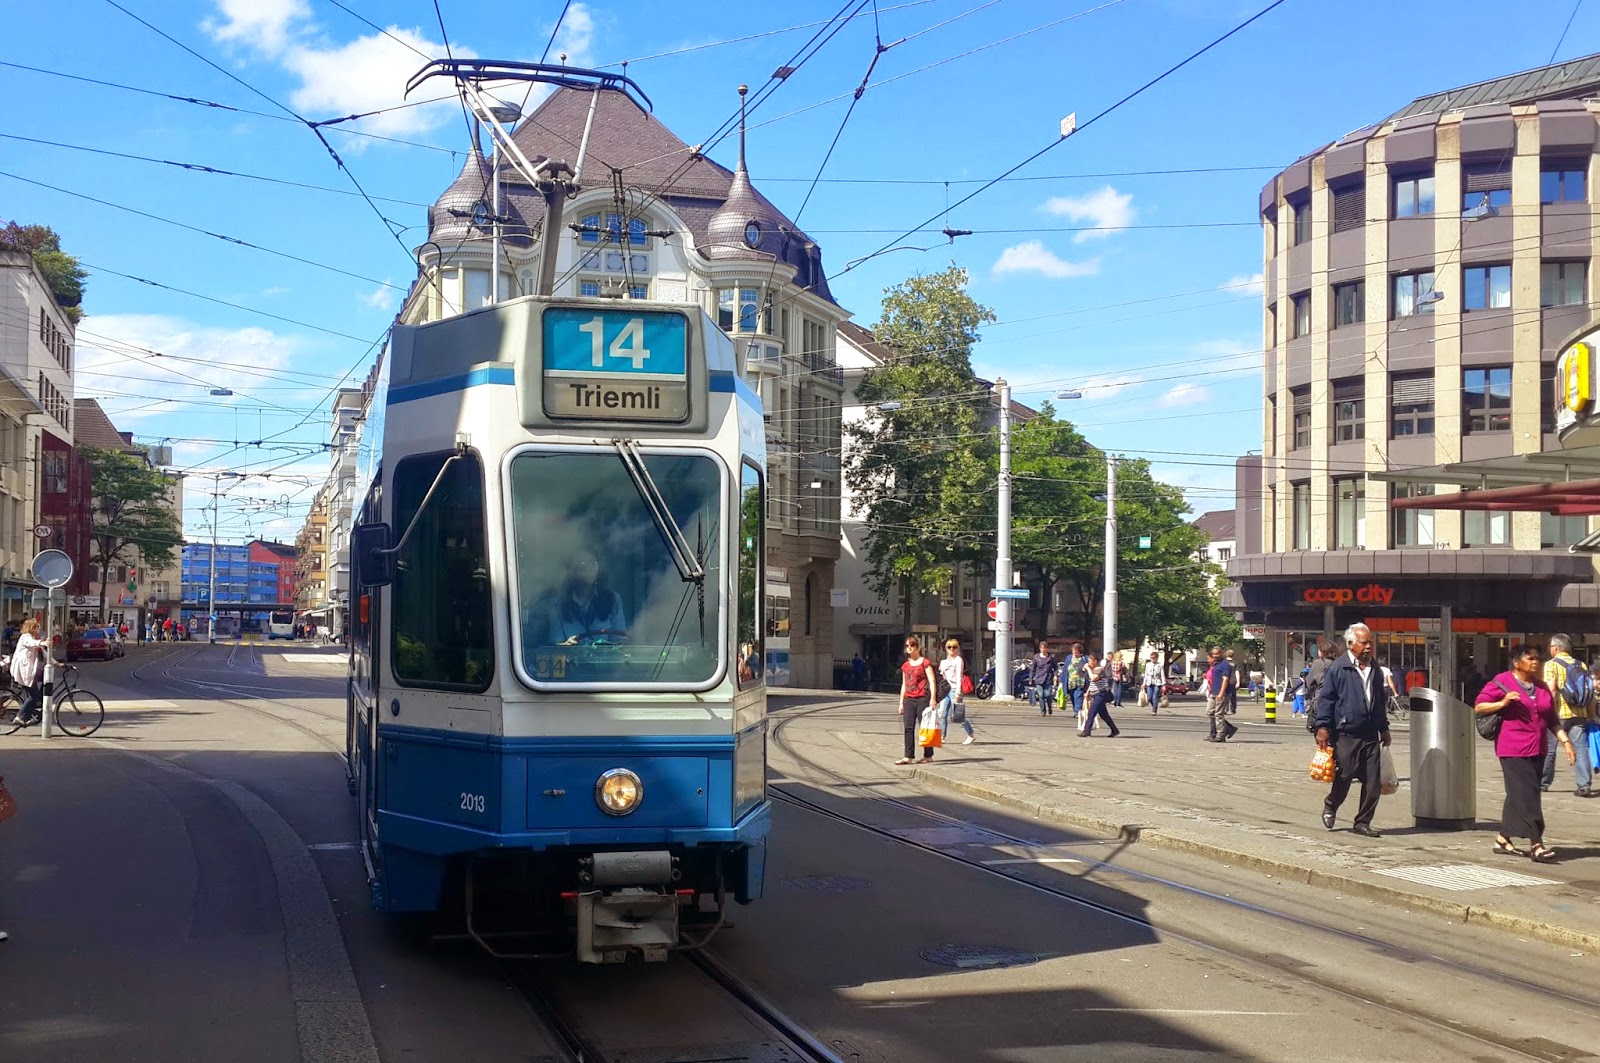 Swiss public transport system tram system